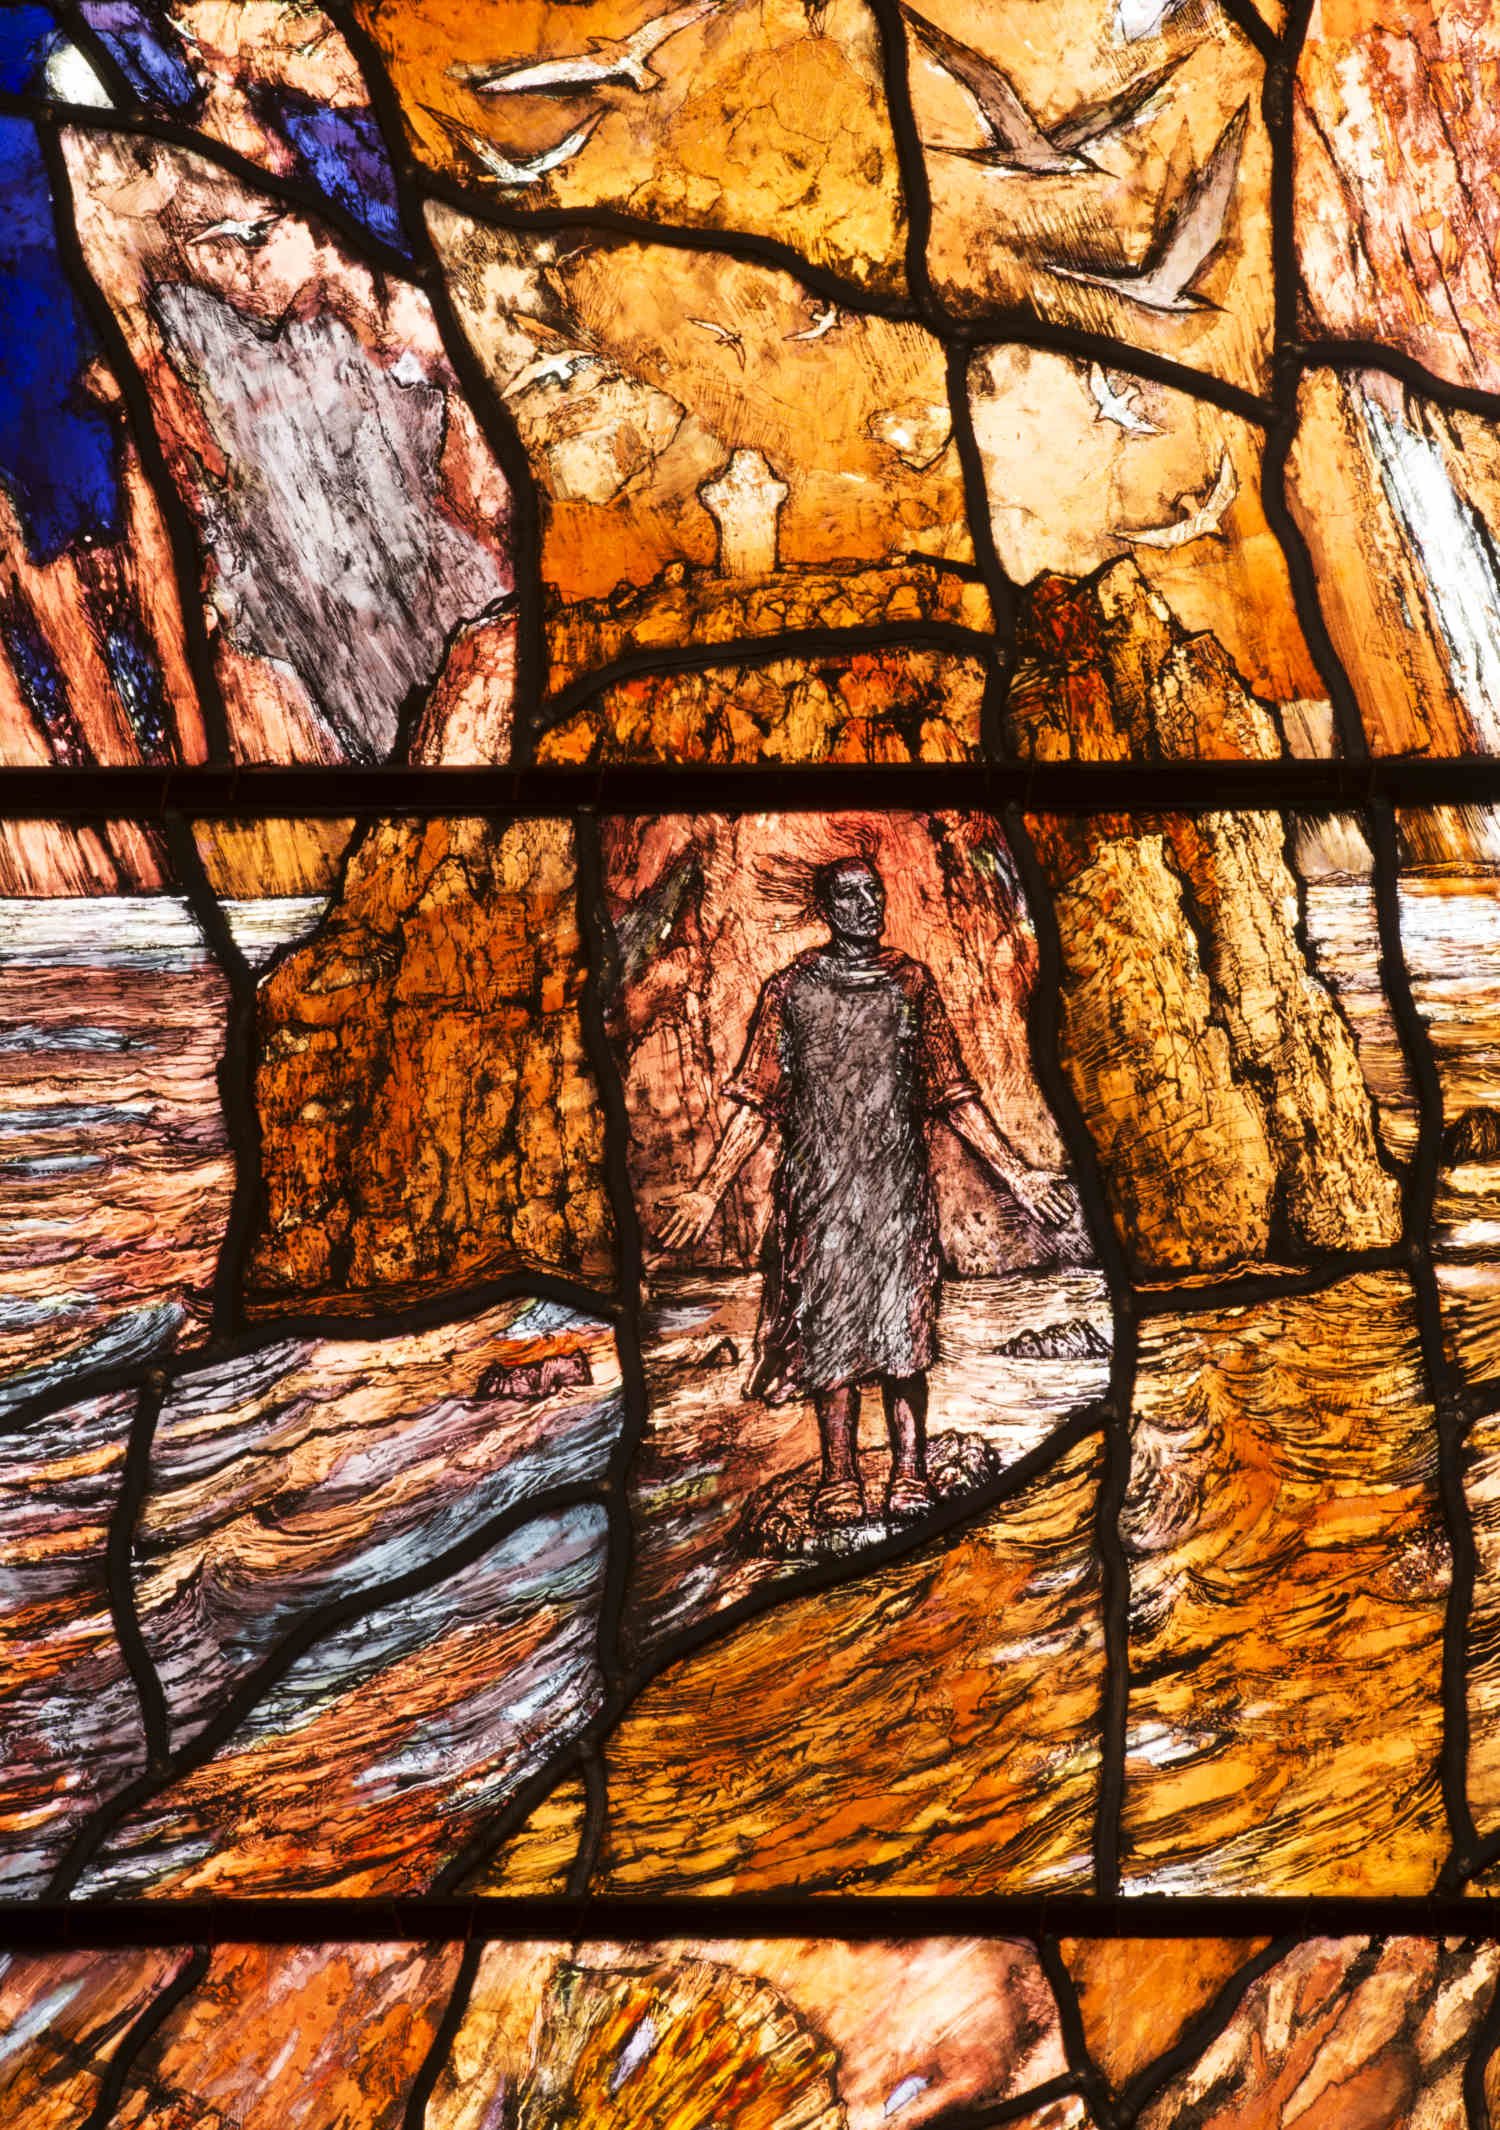 Transfiguration Window